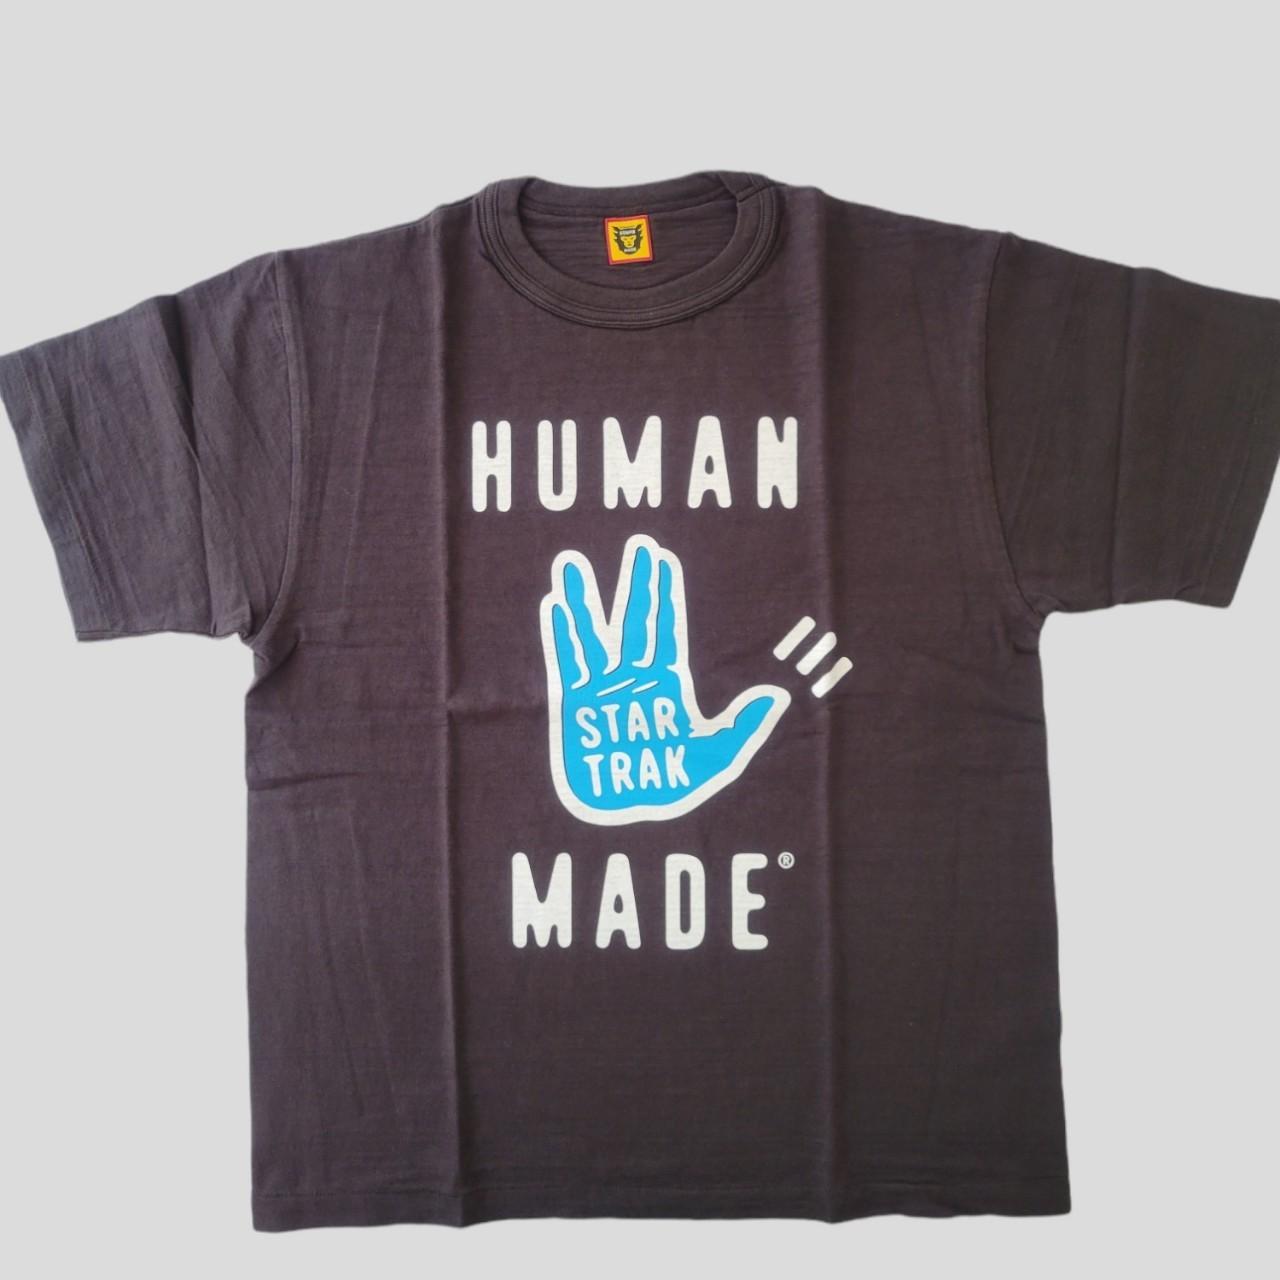 Product Image 1 - NEW
Human Made
Mens L
Star Trak 
Black

#humanmade
#startrak
#deadstock
C2